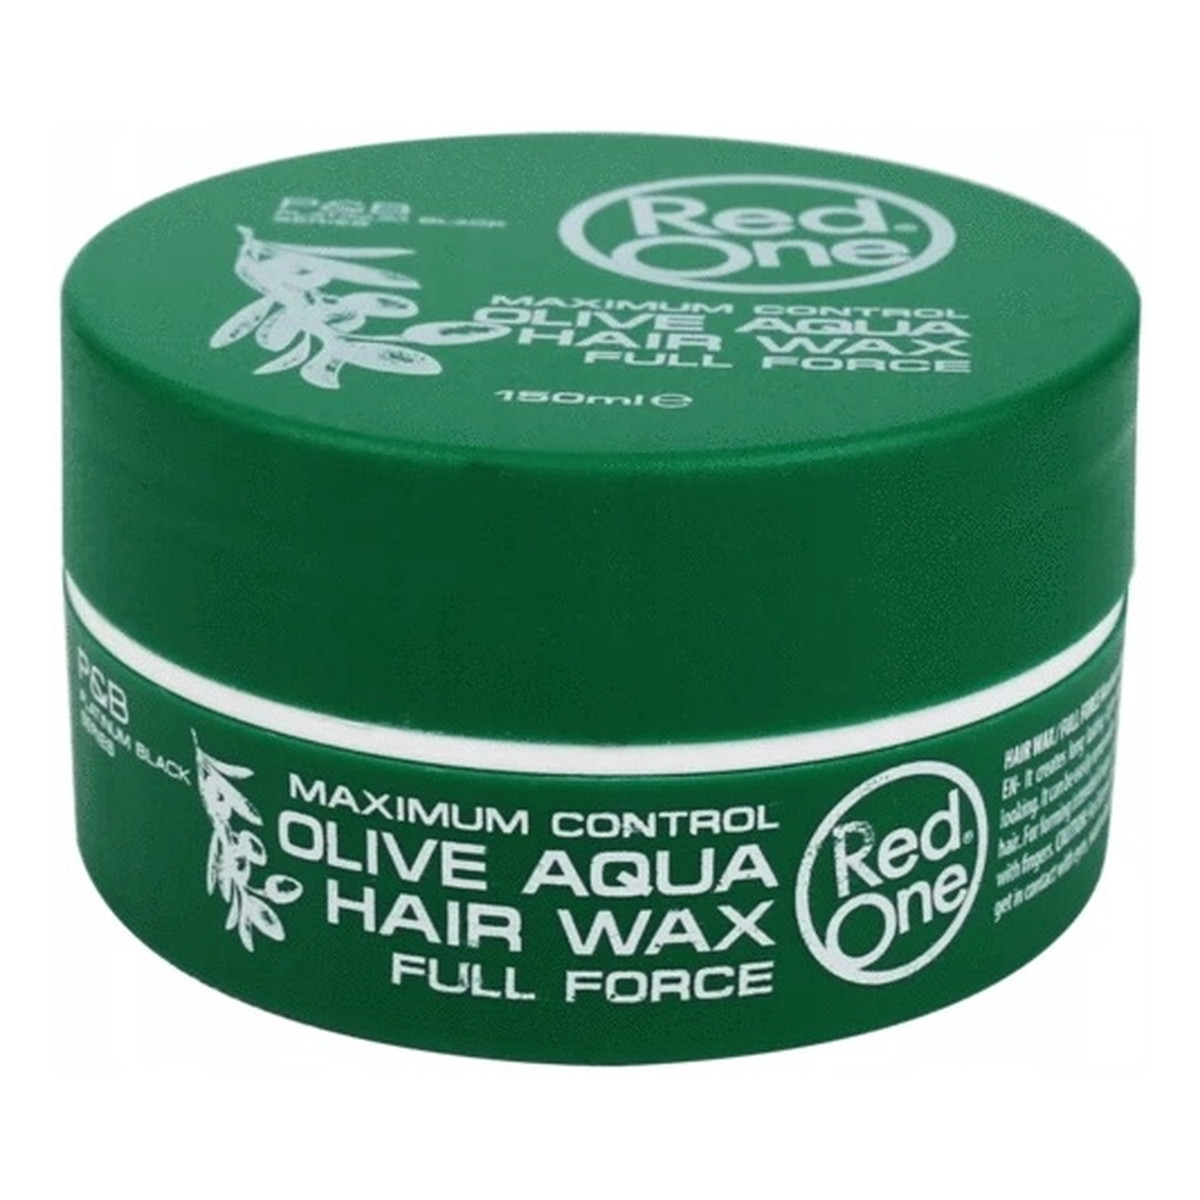 Red One Aqua hair gel wax full force wosk do włosów olive 150ml